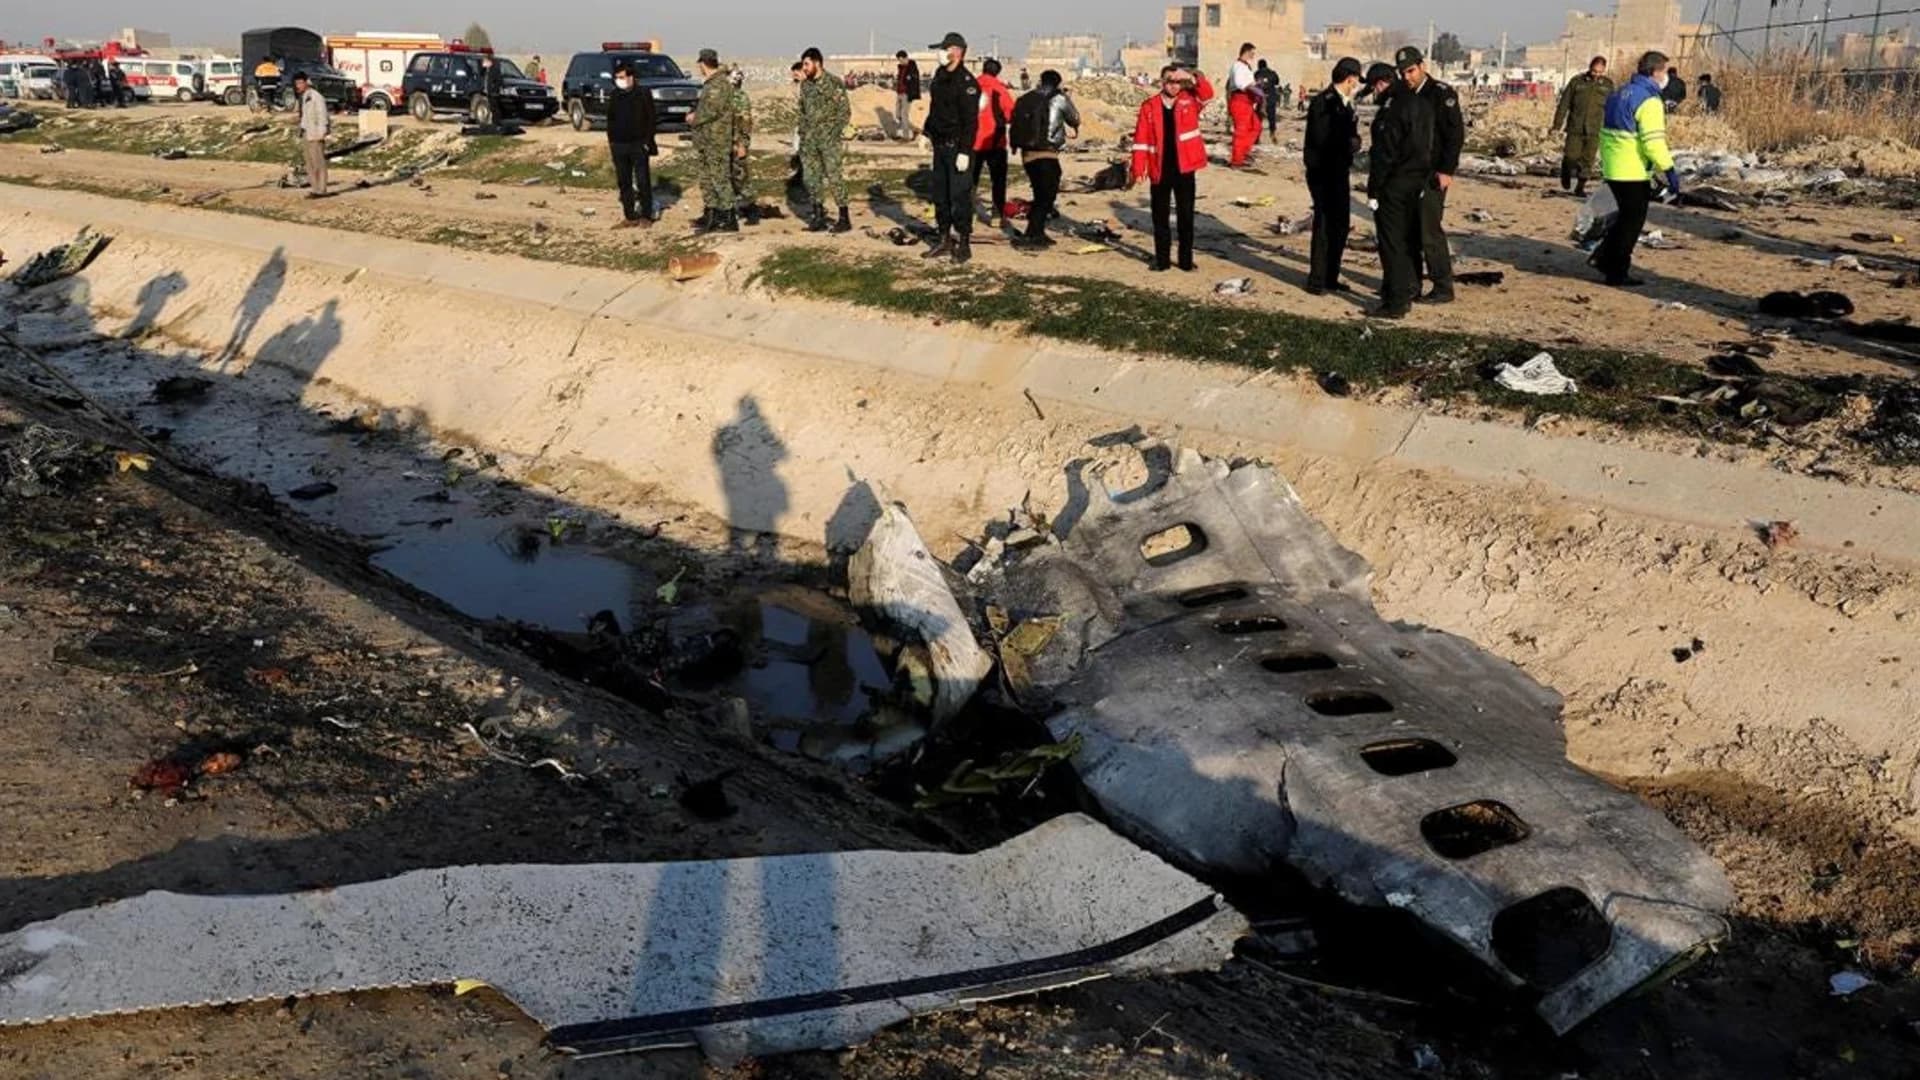 Ukrainian airliner crashes in Iran, killing all 176 aboard